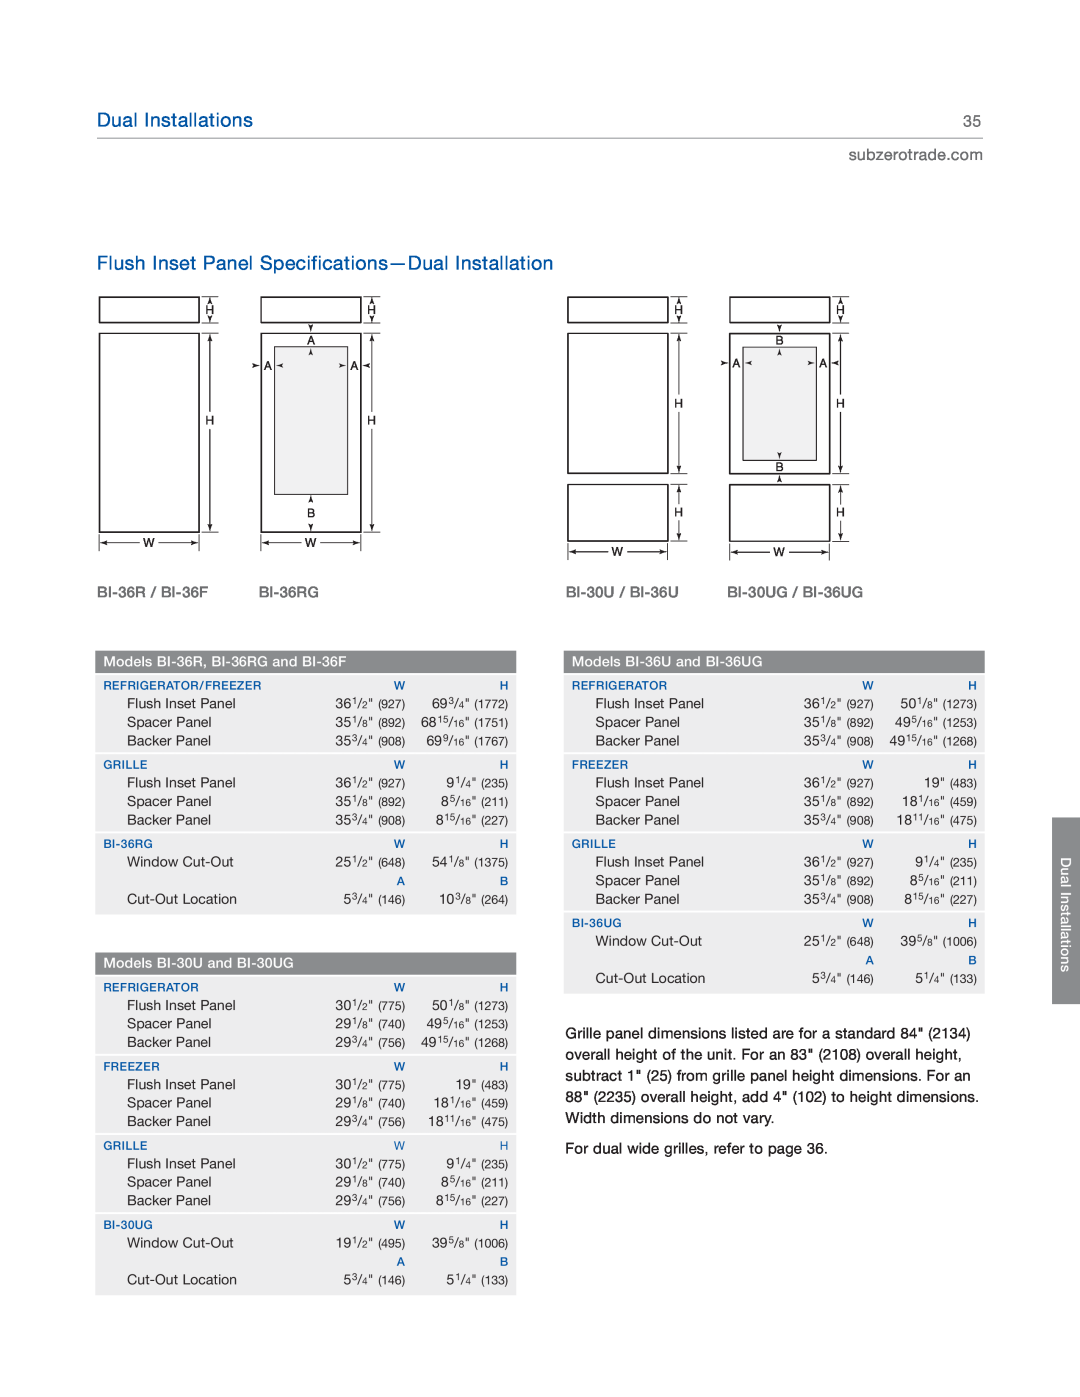 Sub-Zero BI-36S Flush Inset Panel Specifications-Dual Installation, Dual Installations, subzerotrade.com, BI-36R / BI-36F 